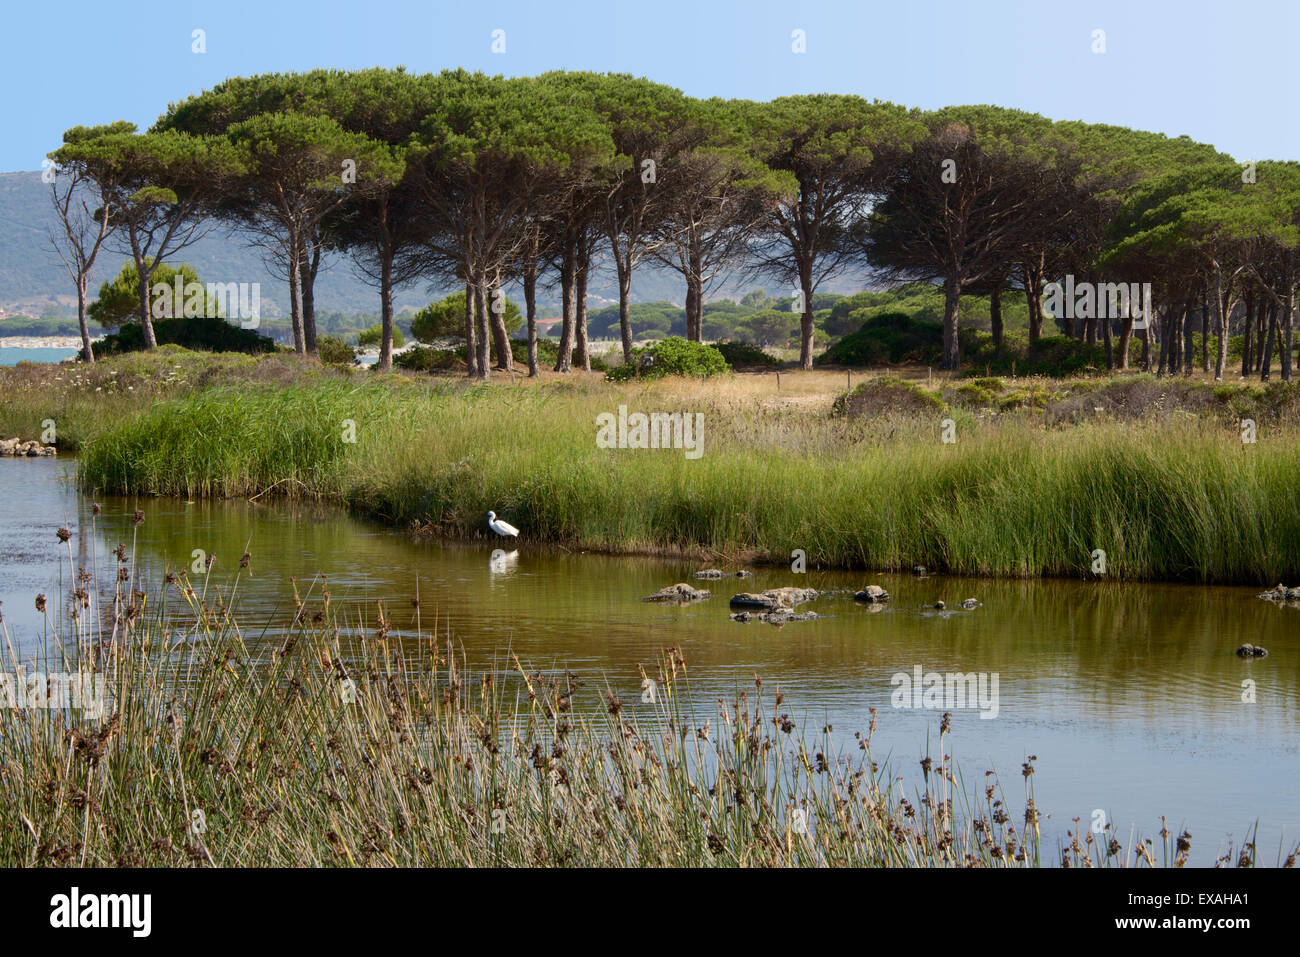 Lake with water plants and bird, sea and beach in the background, Costa degli Oleandri, near Ottiolu harbour, Sardinia, Italy Stock Photo